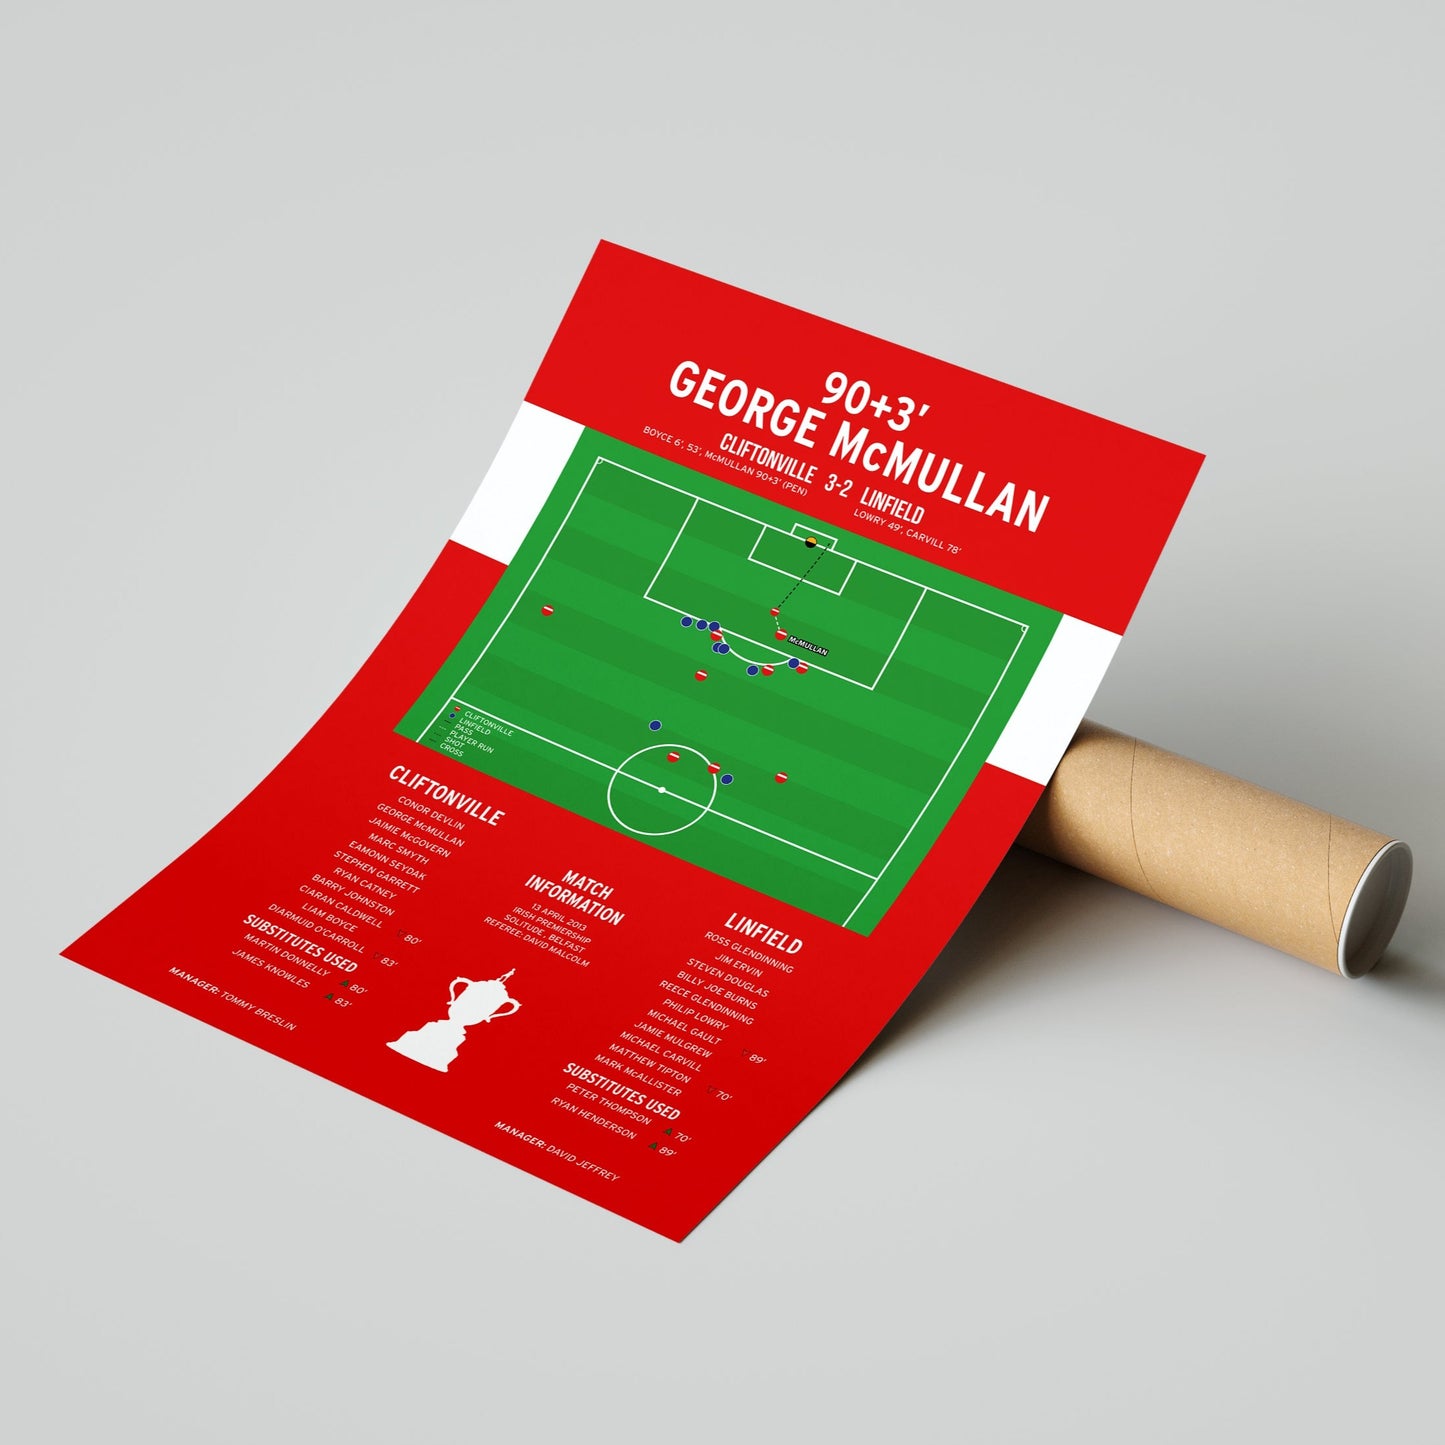 George McMullan Goal – Cliftonville vs Linfield – Irish Premiership 2013